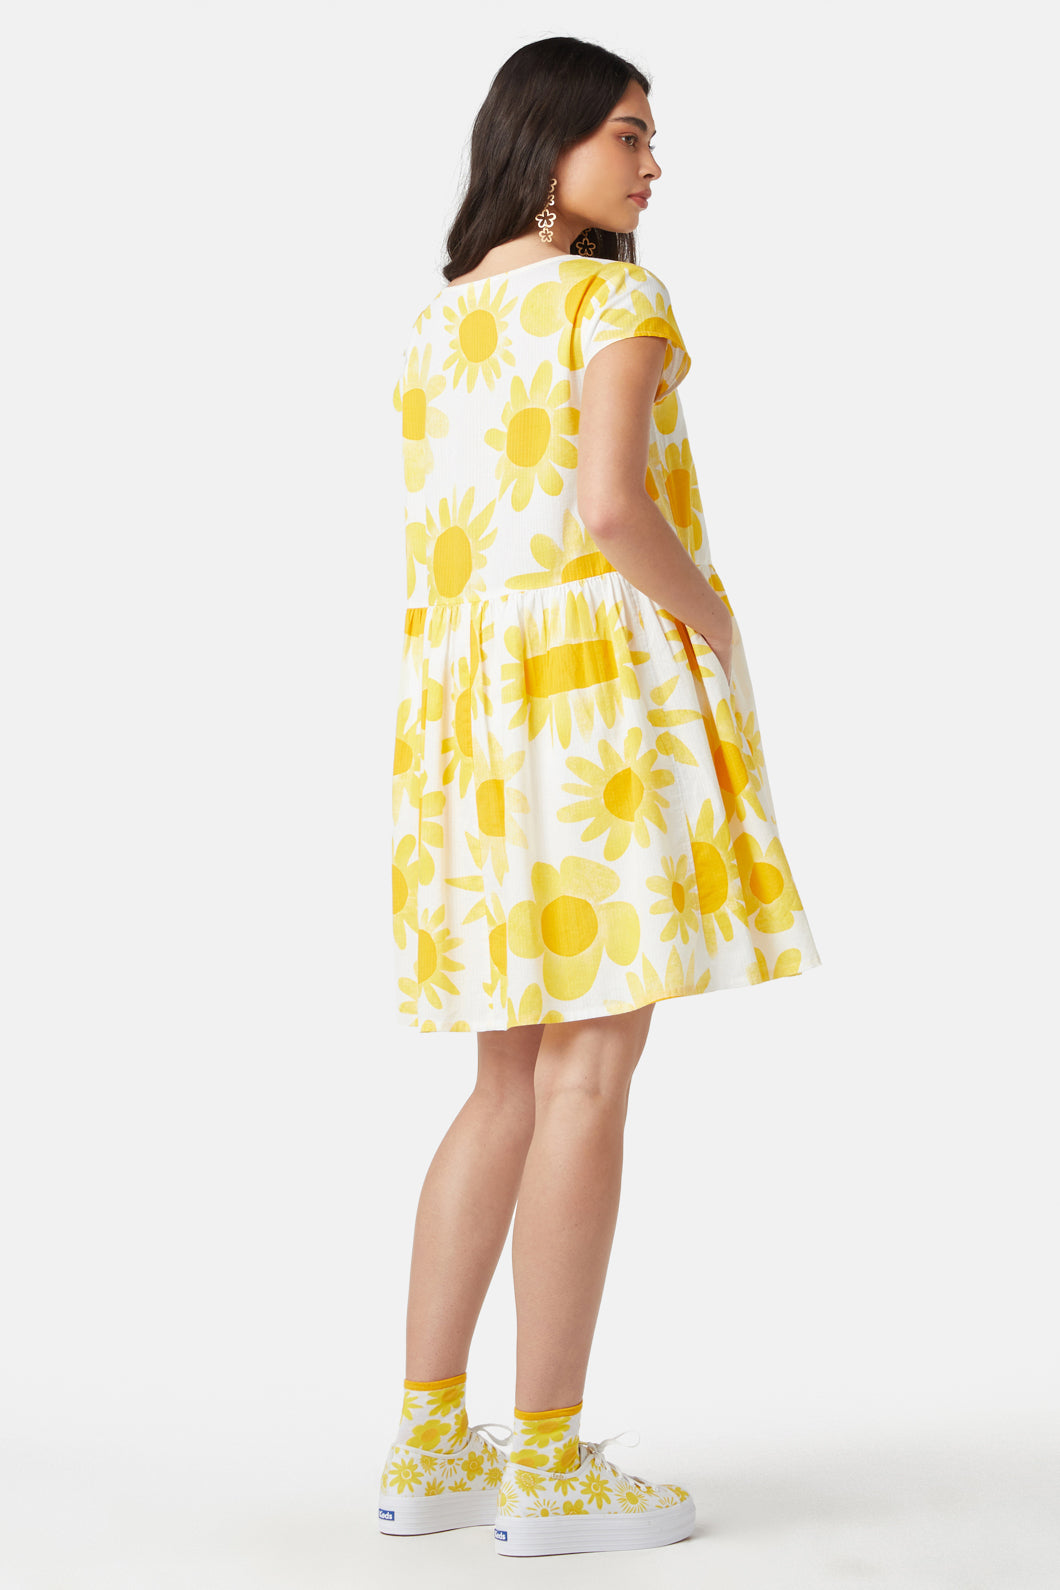 Flowering Yellow Beach Dress – Gorman